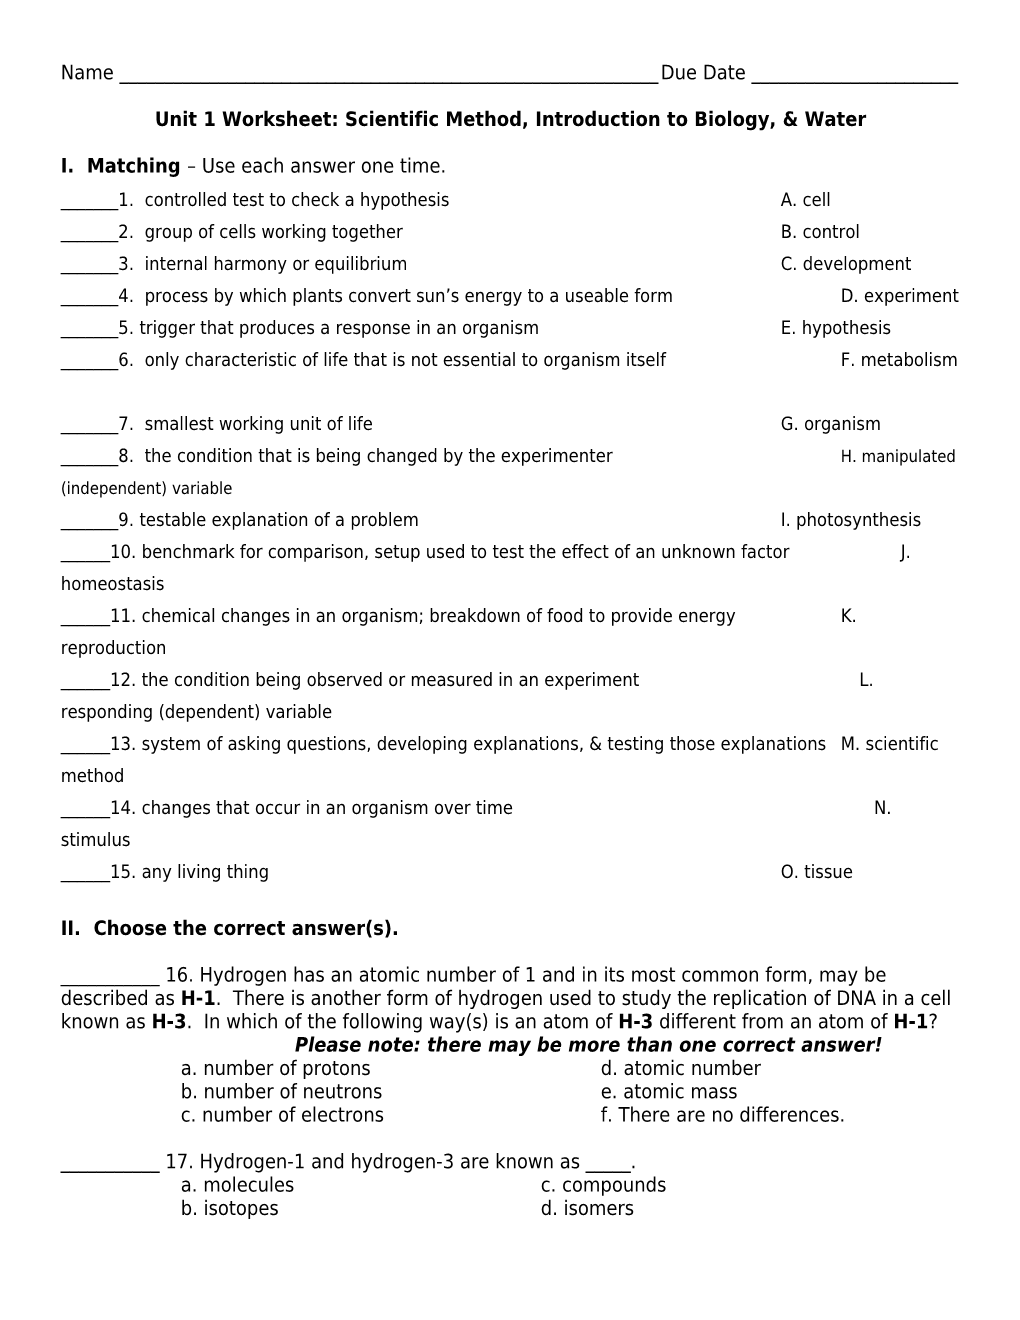 Unit 1 Worksheet: Scientific Method, Introduction to Biology, & Water